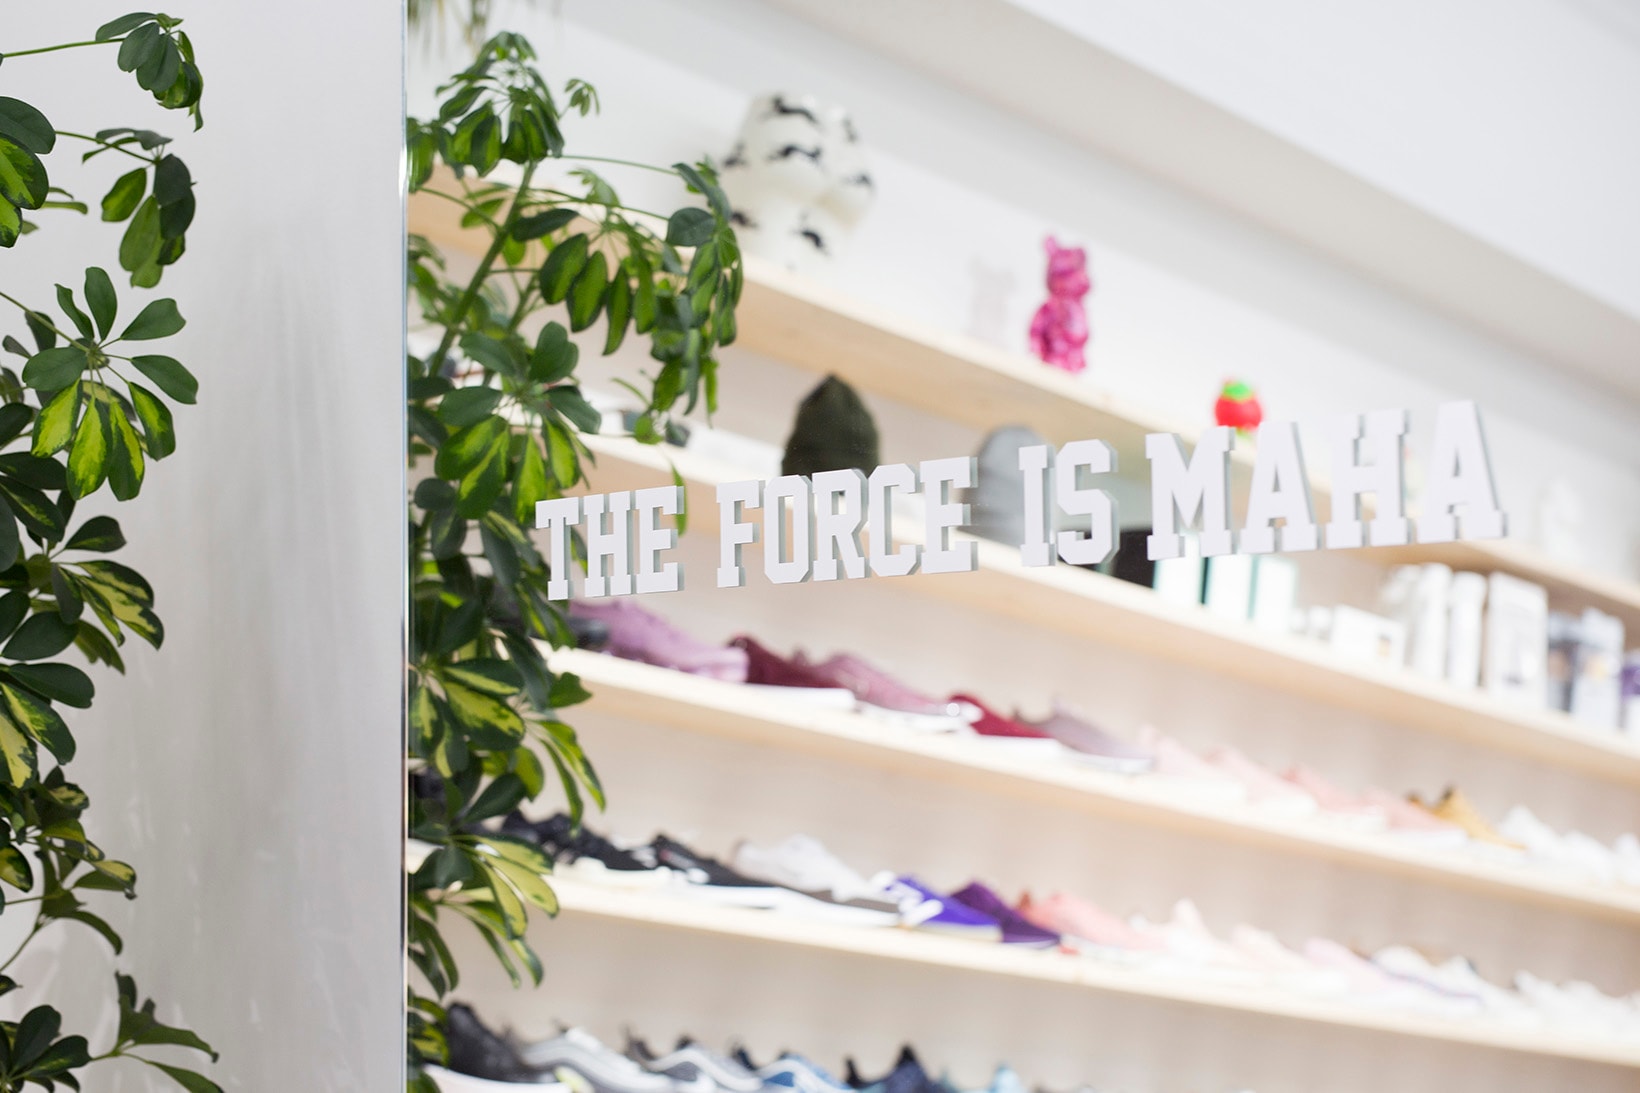 Maha amsterdam womens sneakers female footwear shopping interior sneaker store cool stores ladies girls